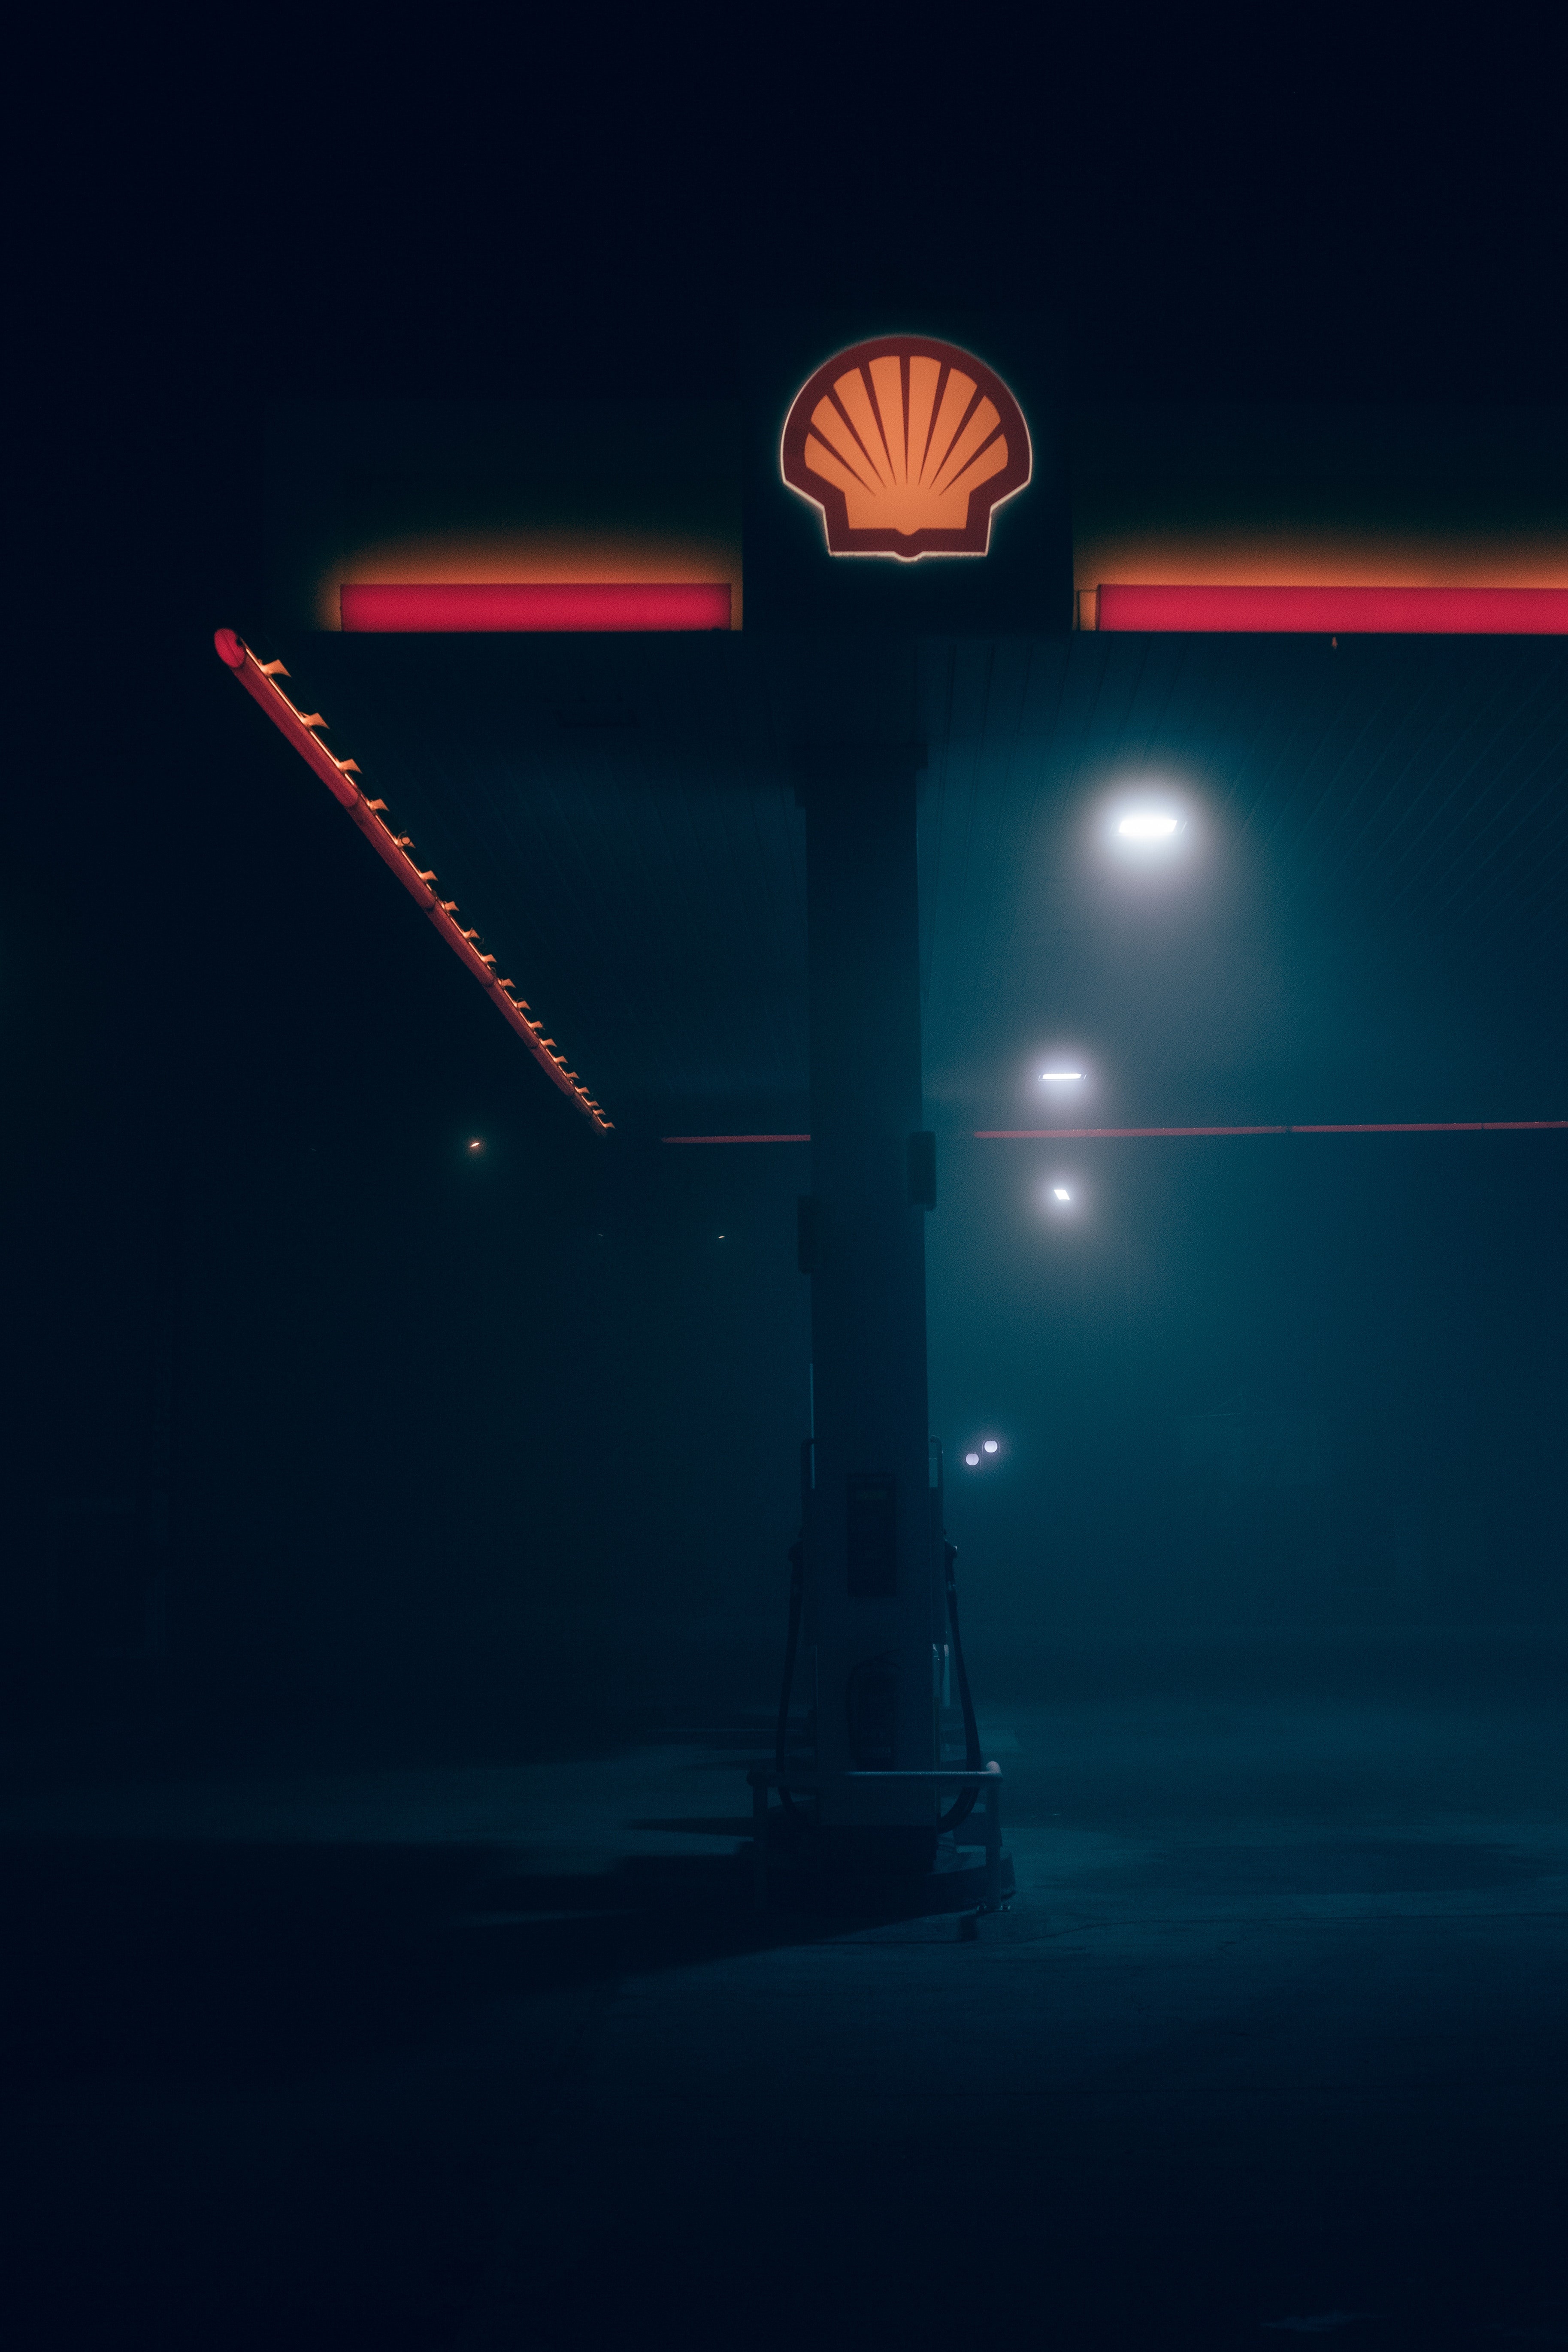 Shell Gas Station on Foggy Night · Free